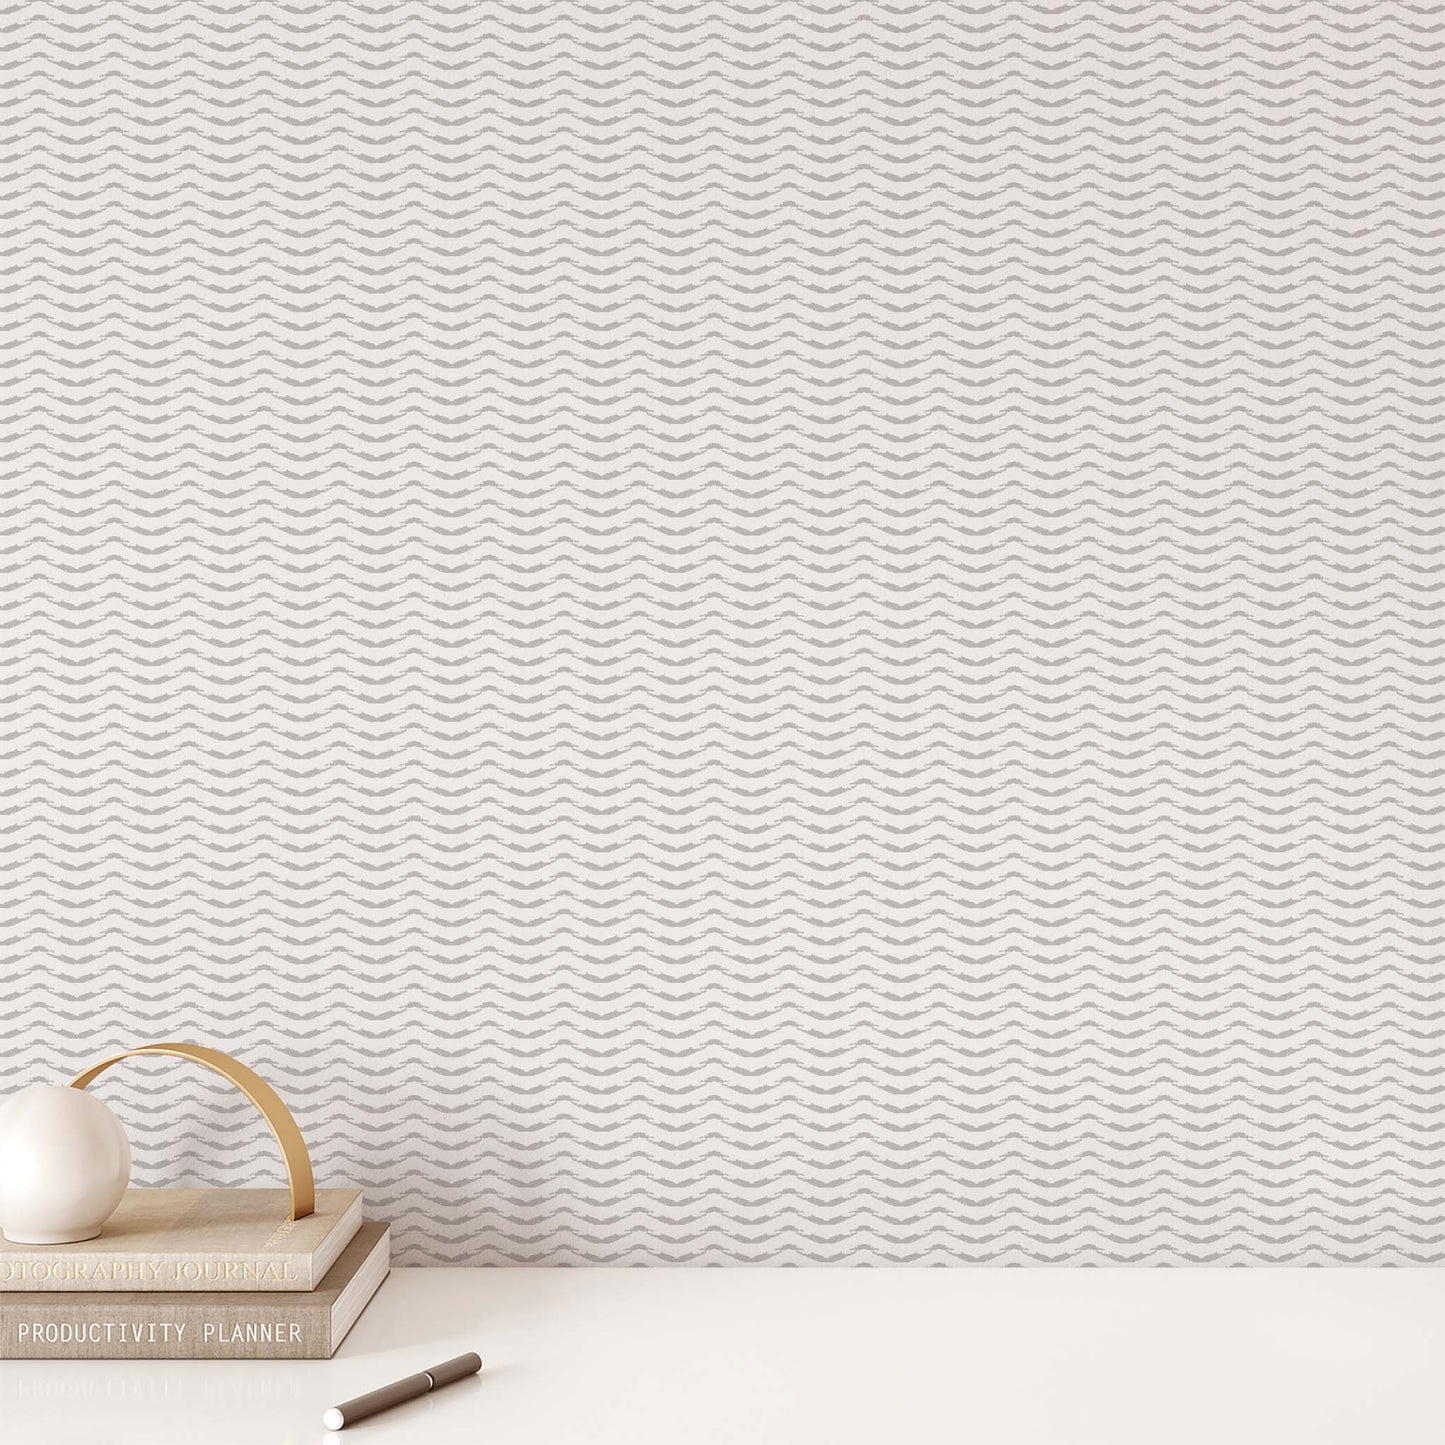 Tidal Wallpaper - White and Gray